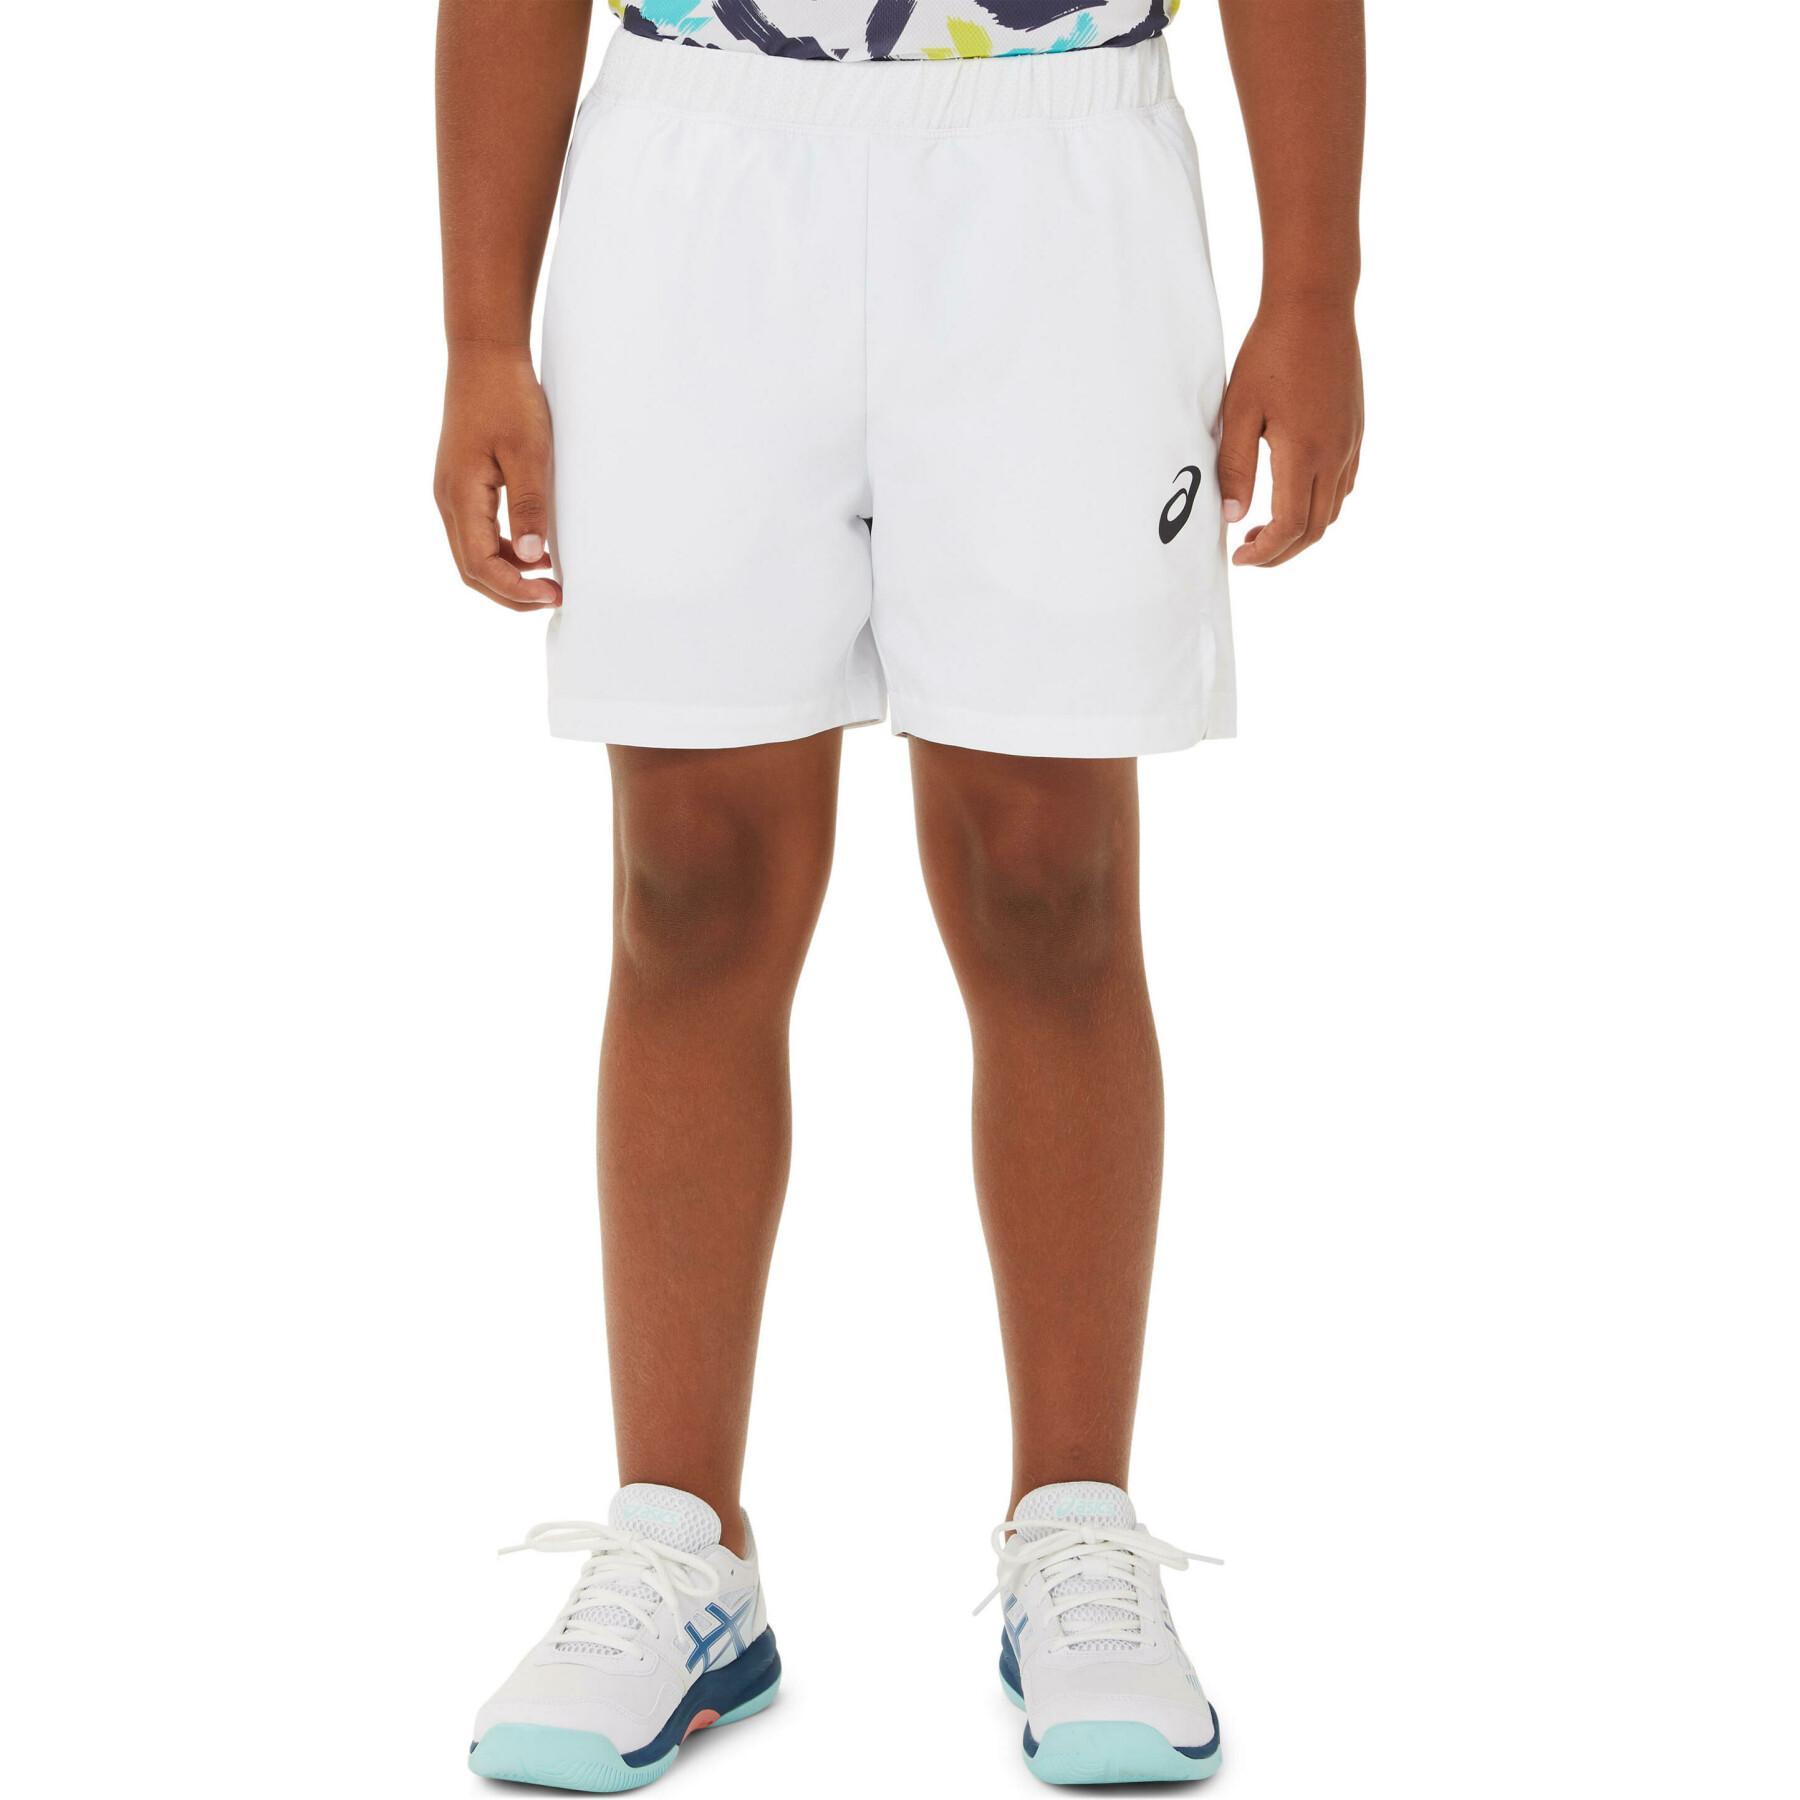 Children's shorts Asics Boys Tennis